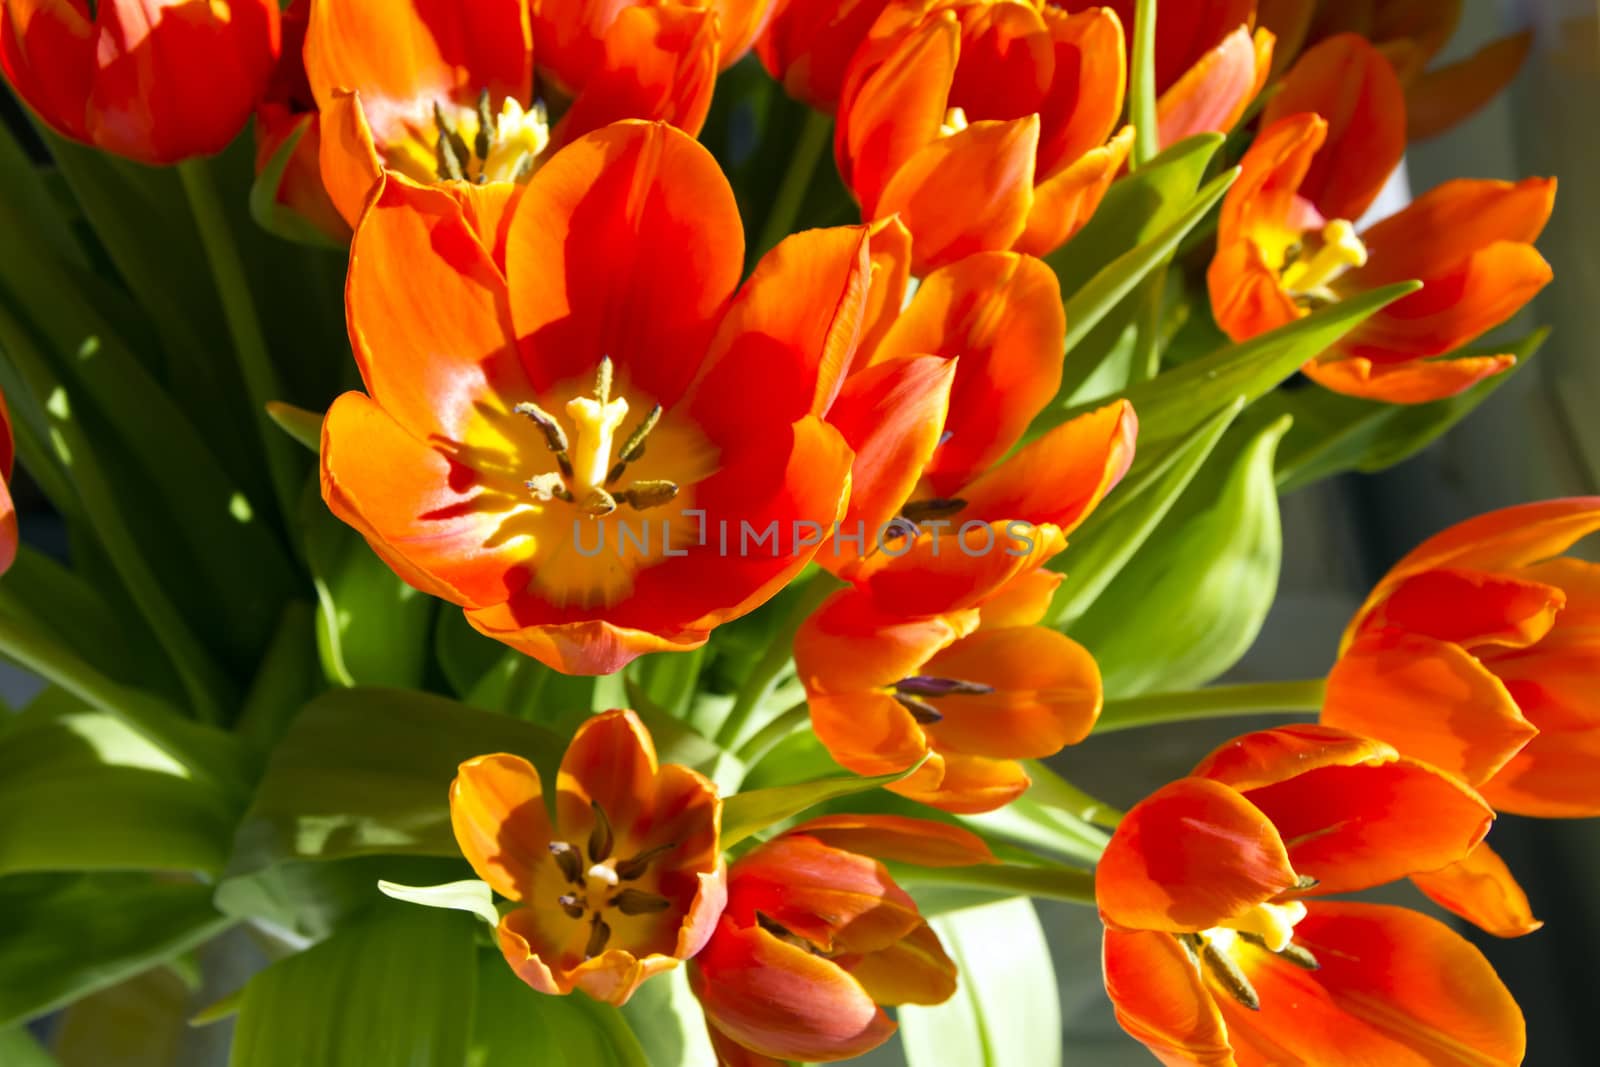 tulips in sunlight